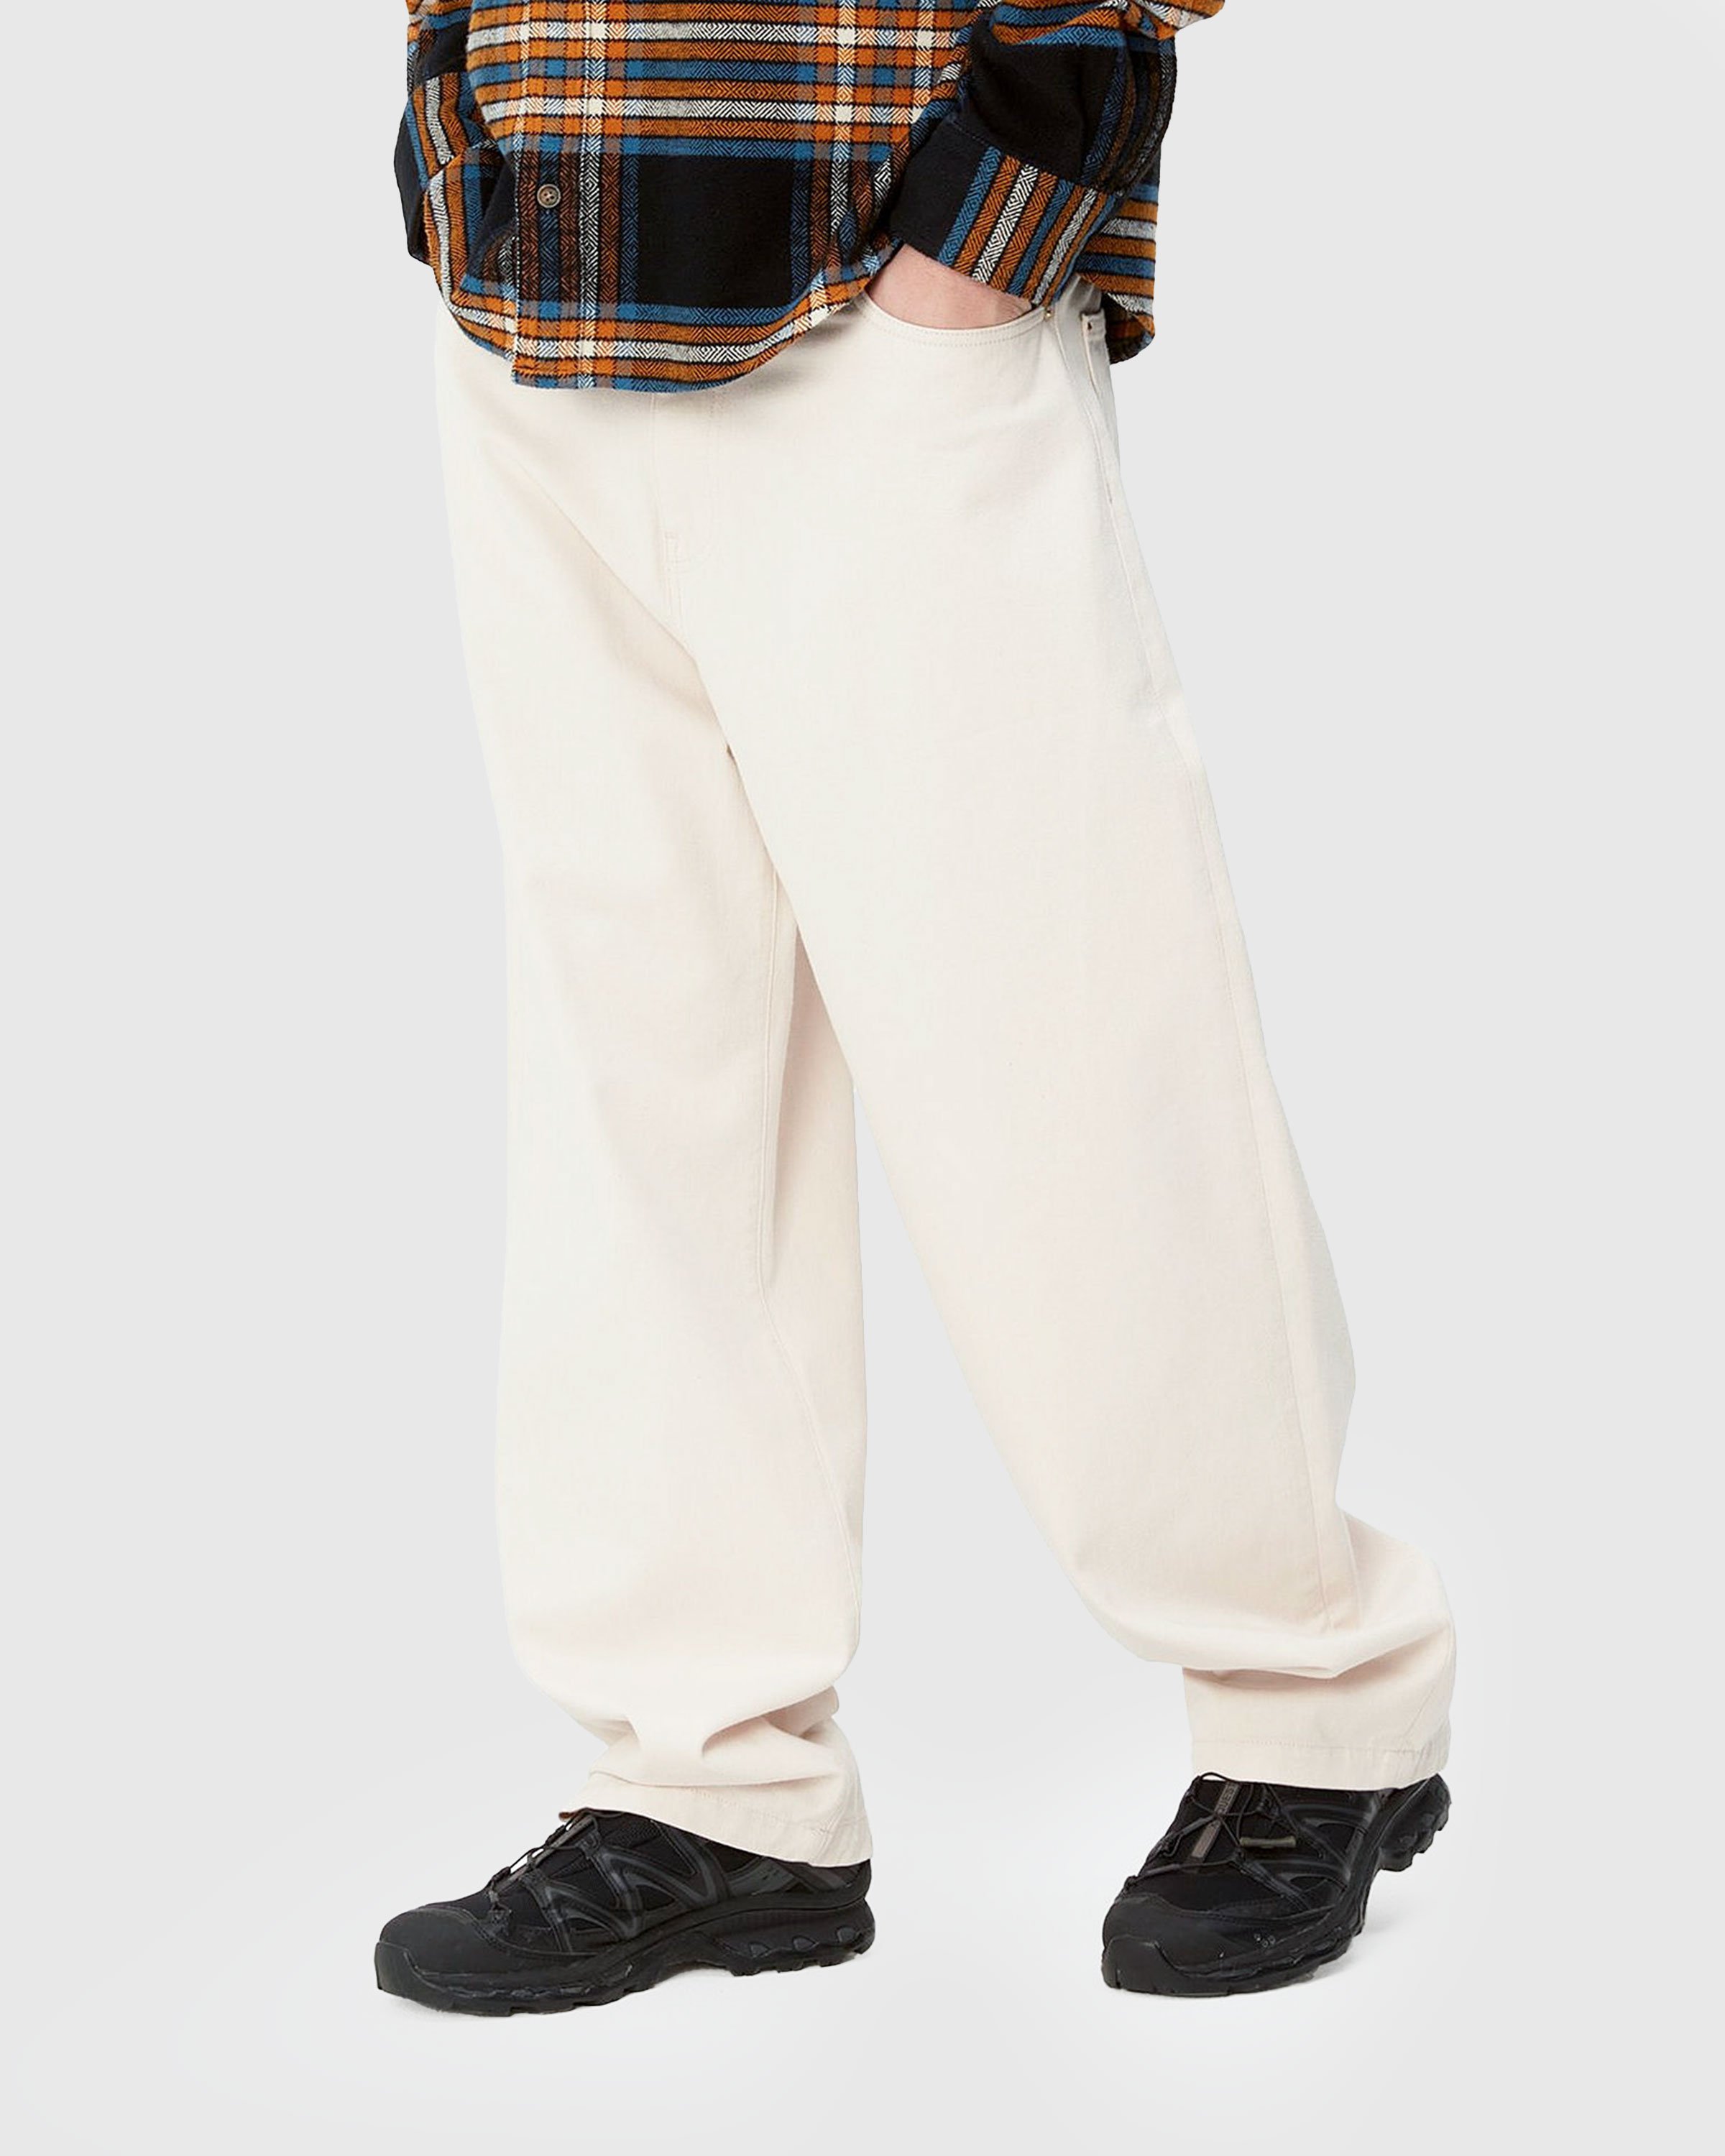 Carhartt WIP - Derby Pant Natural/Rinsed - Clothing - Beige - Image 2